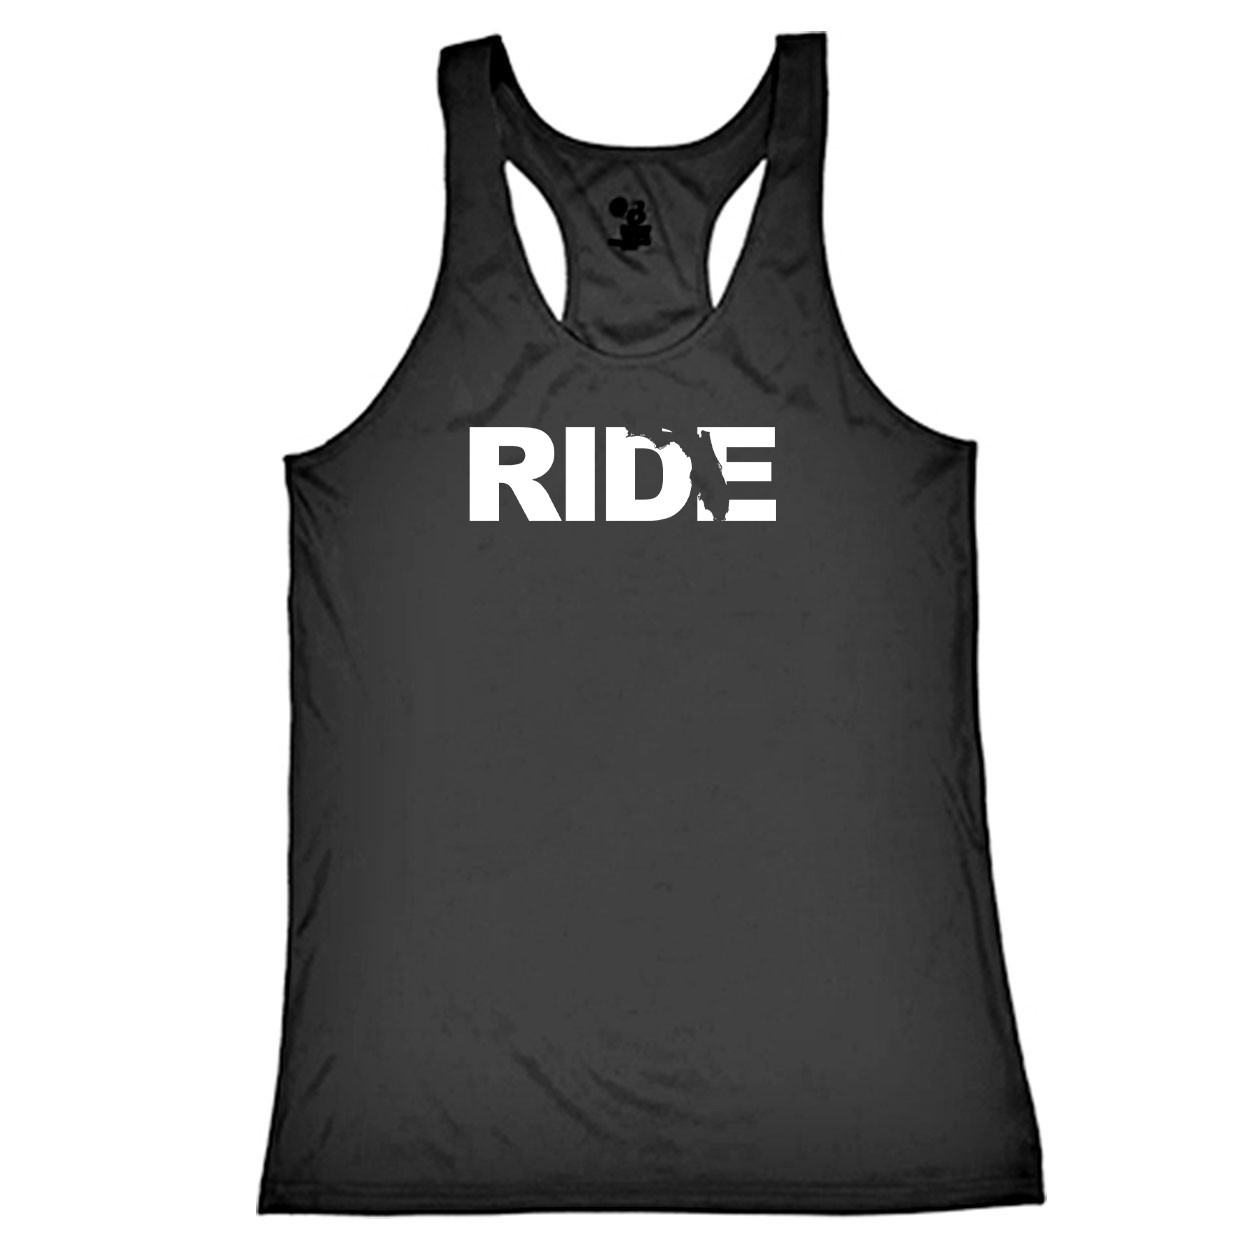 Ride Florida Classic Youth Girls Performance Racerback Tank Top Black (White Logo)